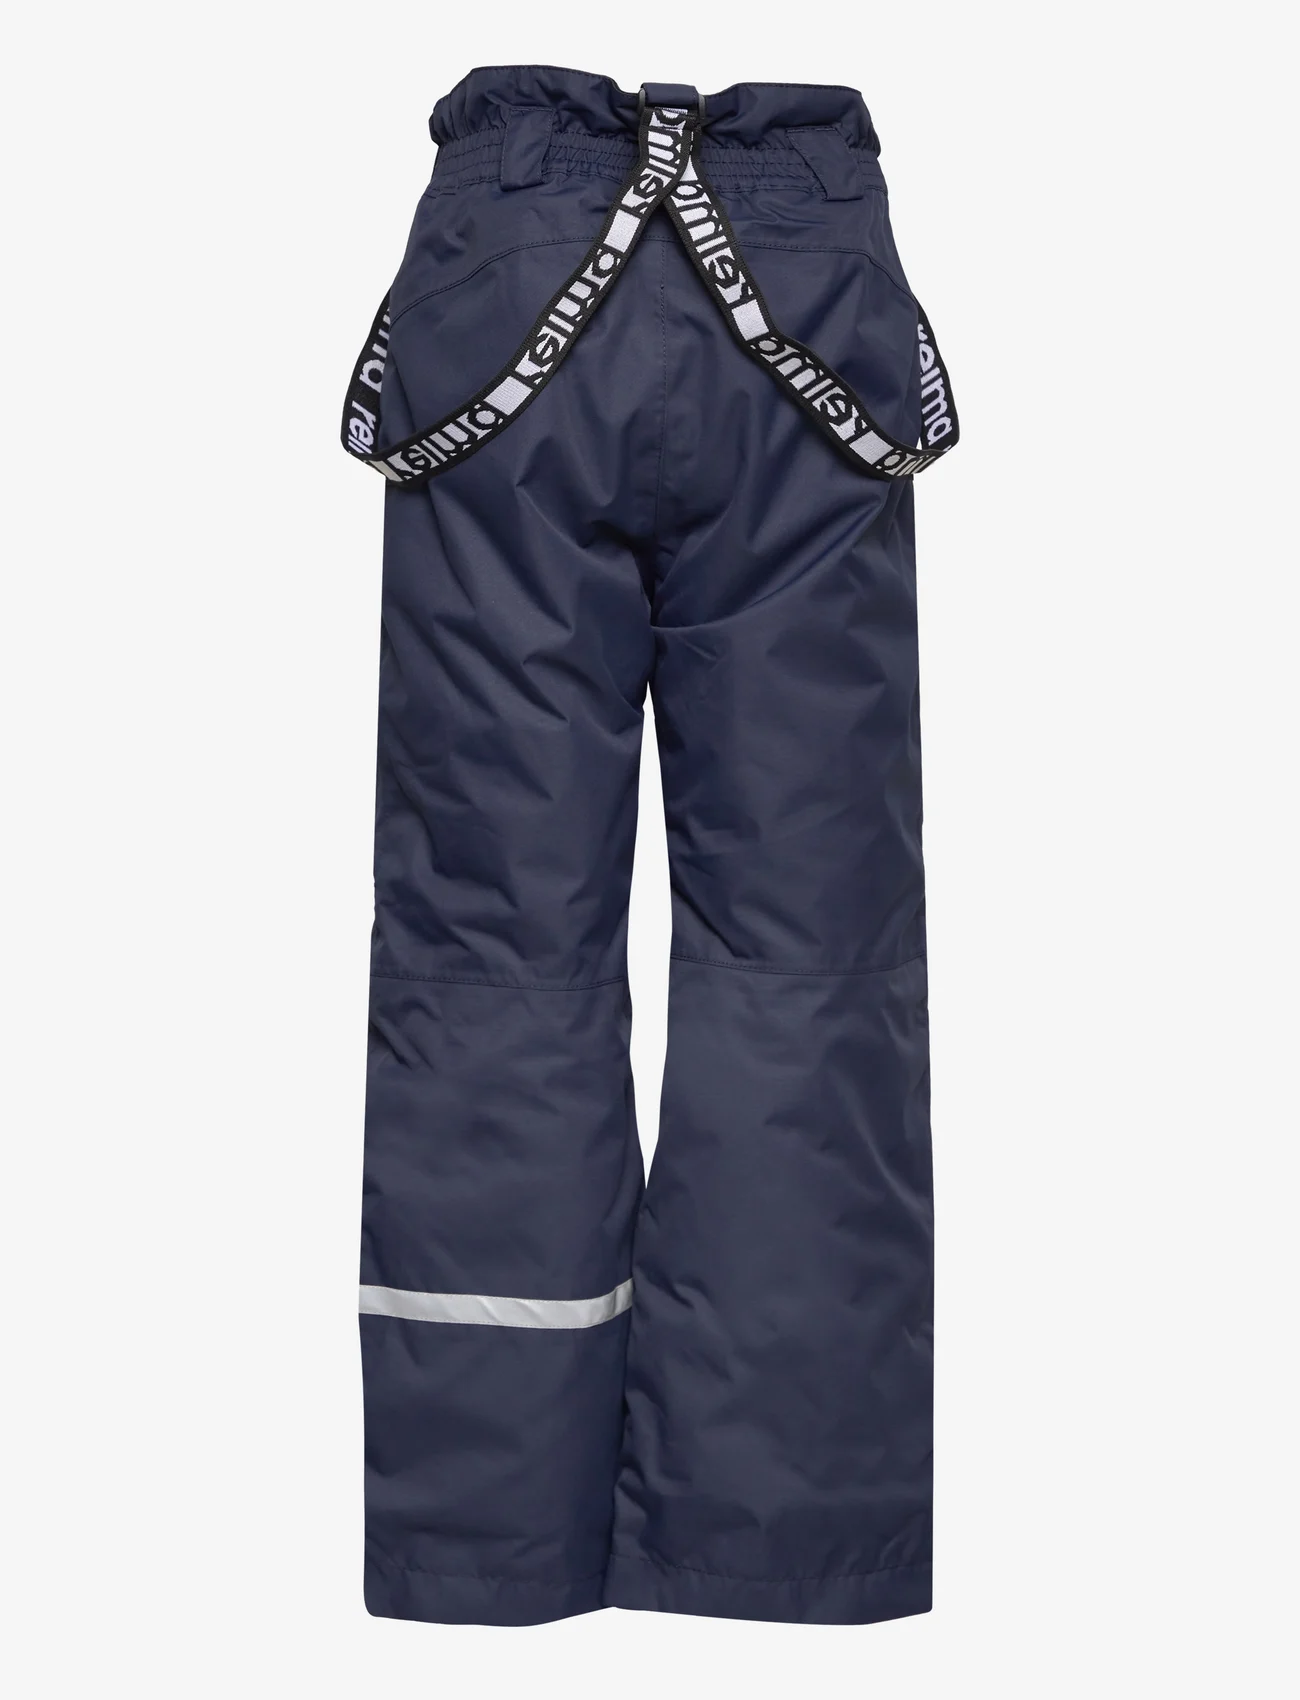 Reima - Winter pants, Tuokio - friluftsbyxor - navy - 1